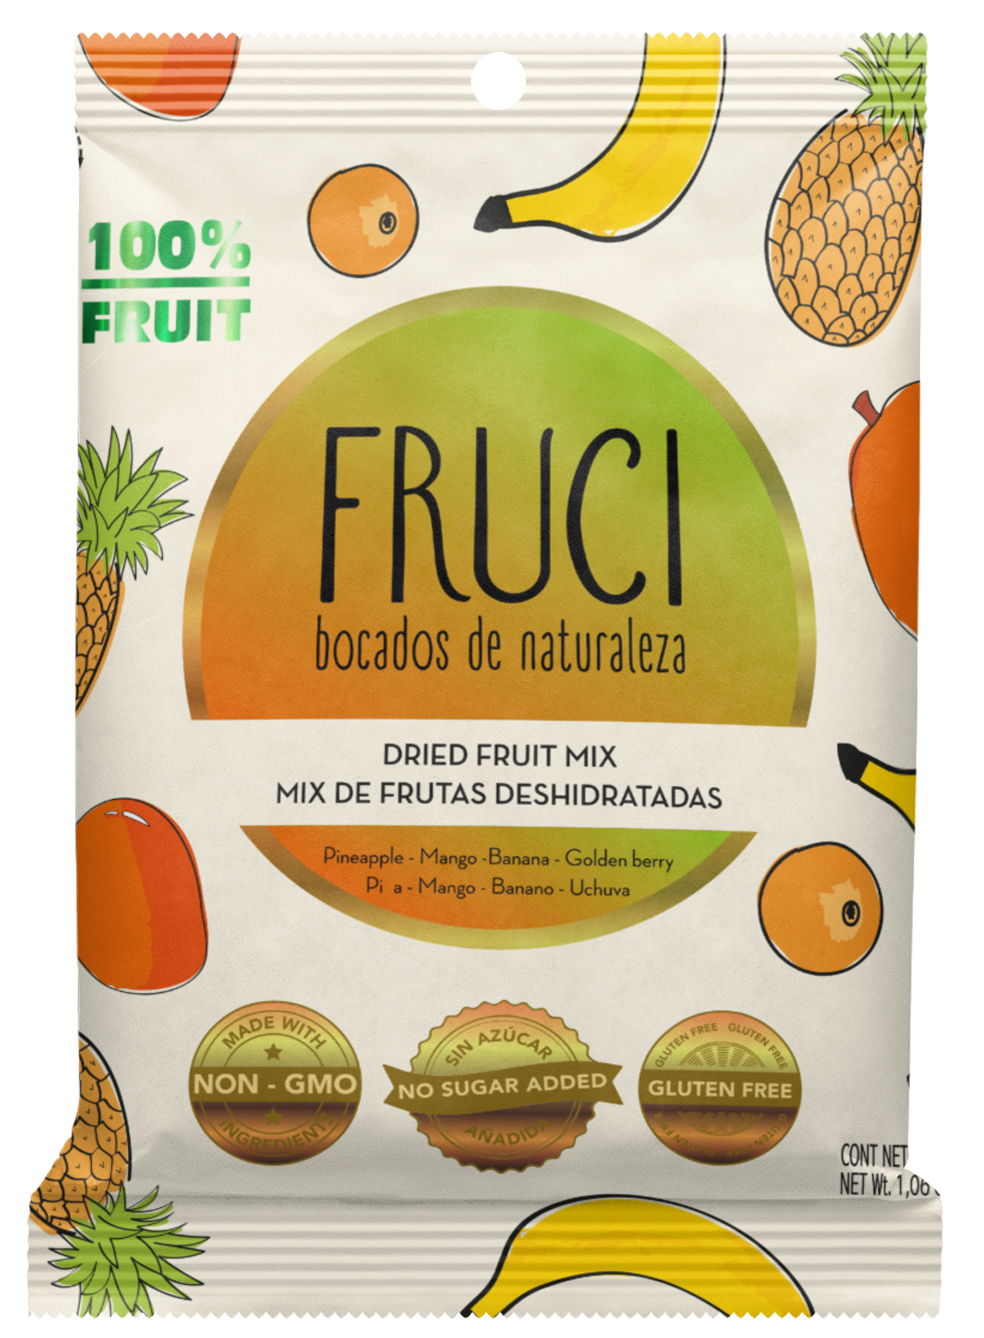 Fruci100% Surtidas Pack x 8 unidades 30g (Fruta deshidratada: Banano, Mango, Mix, Piña))